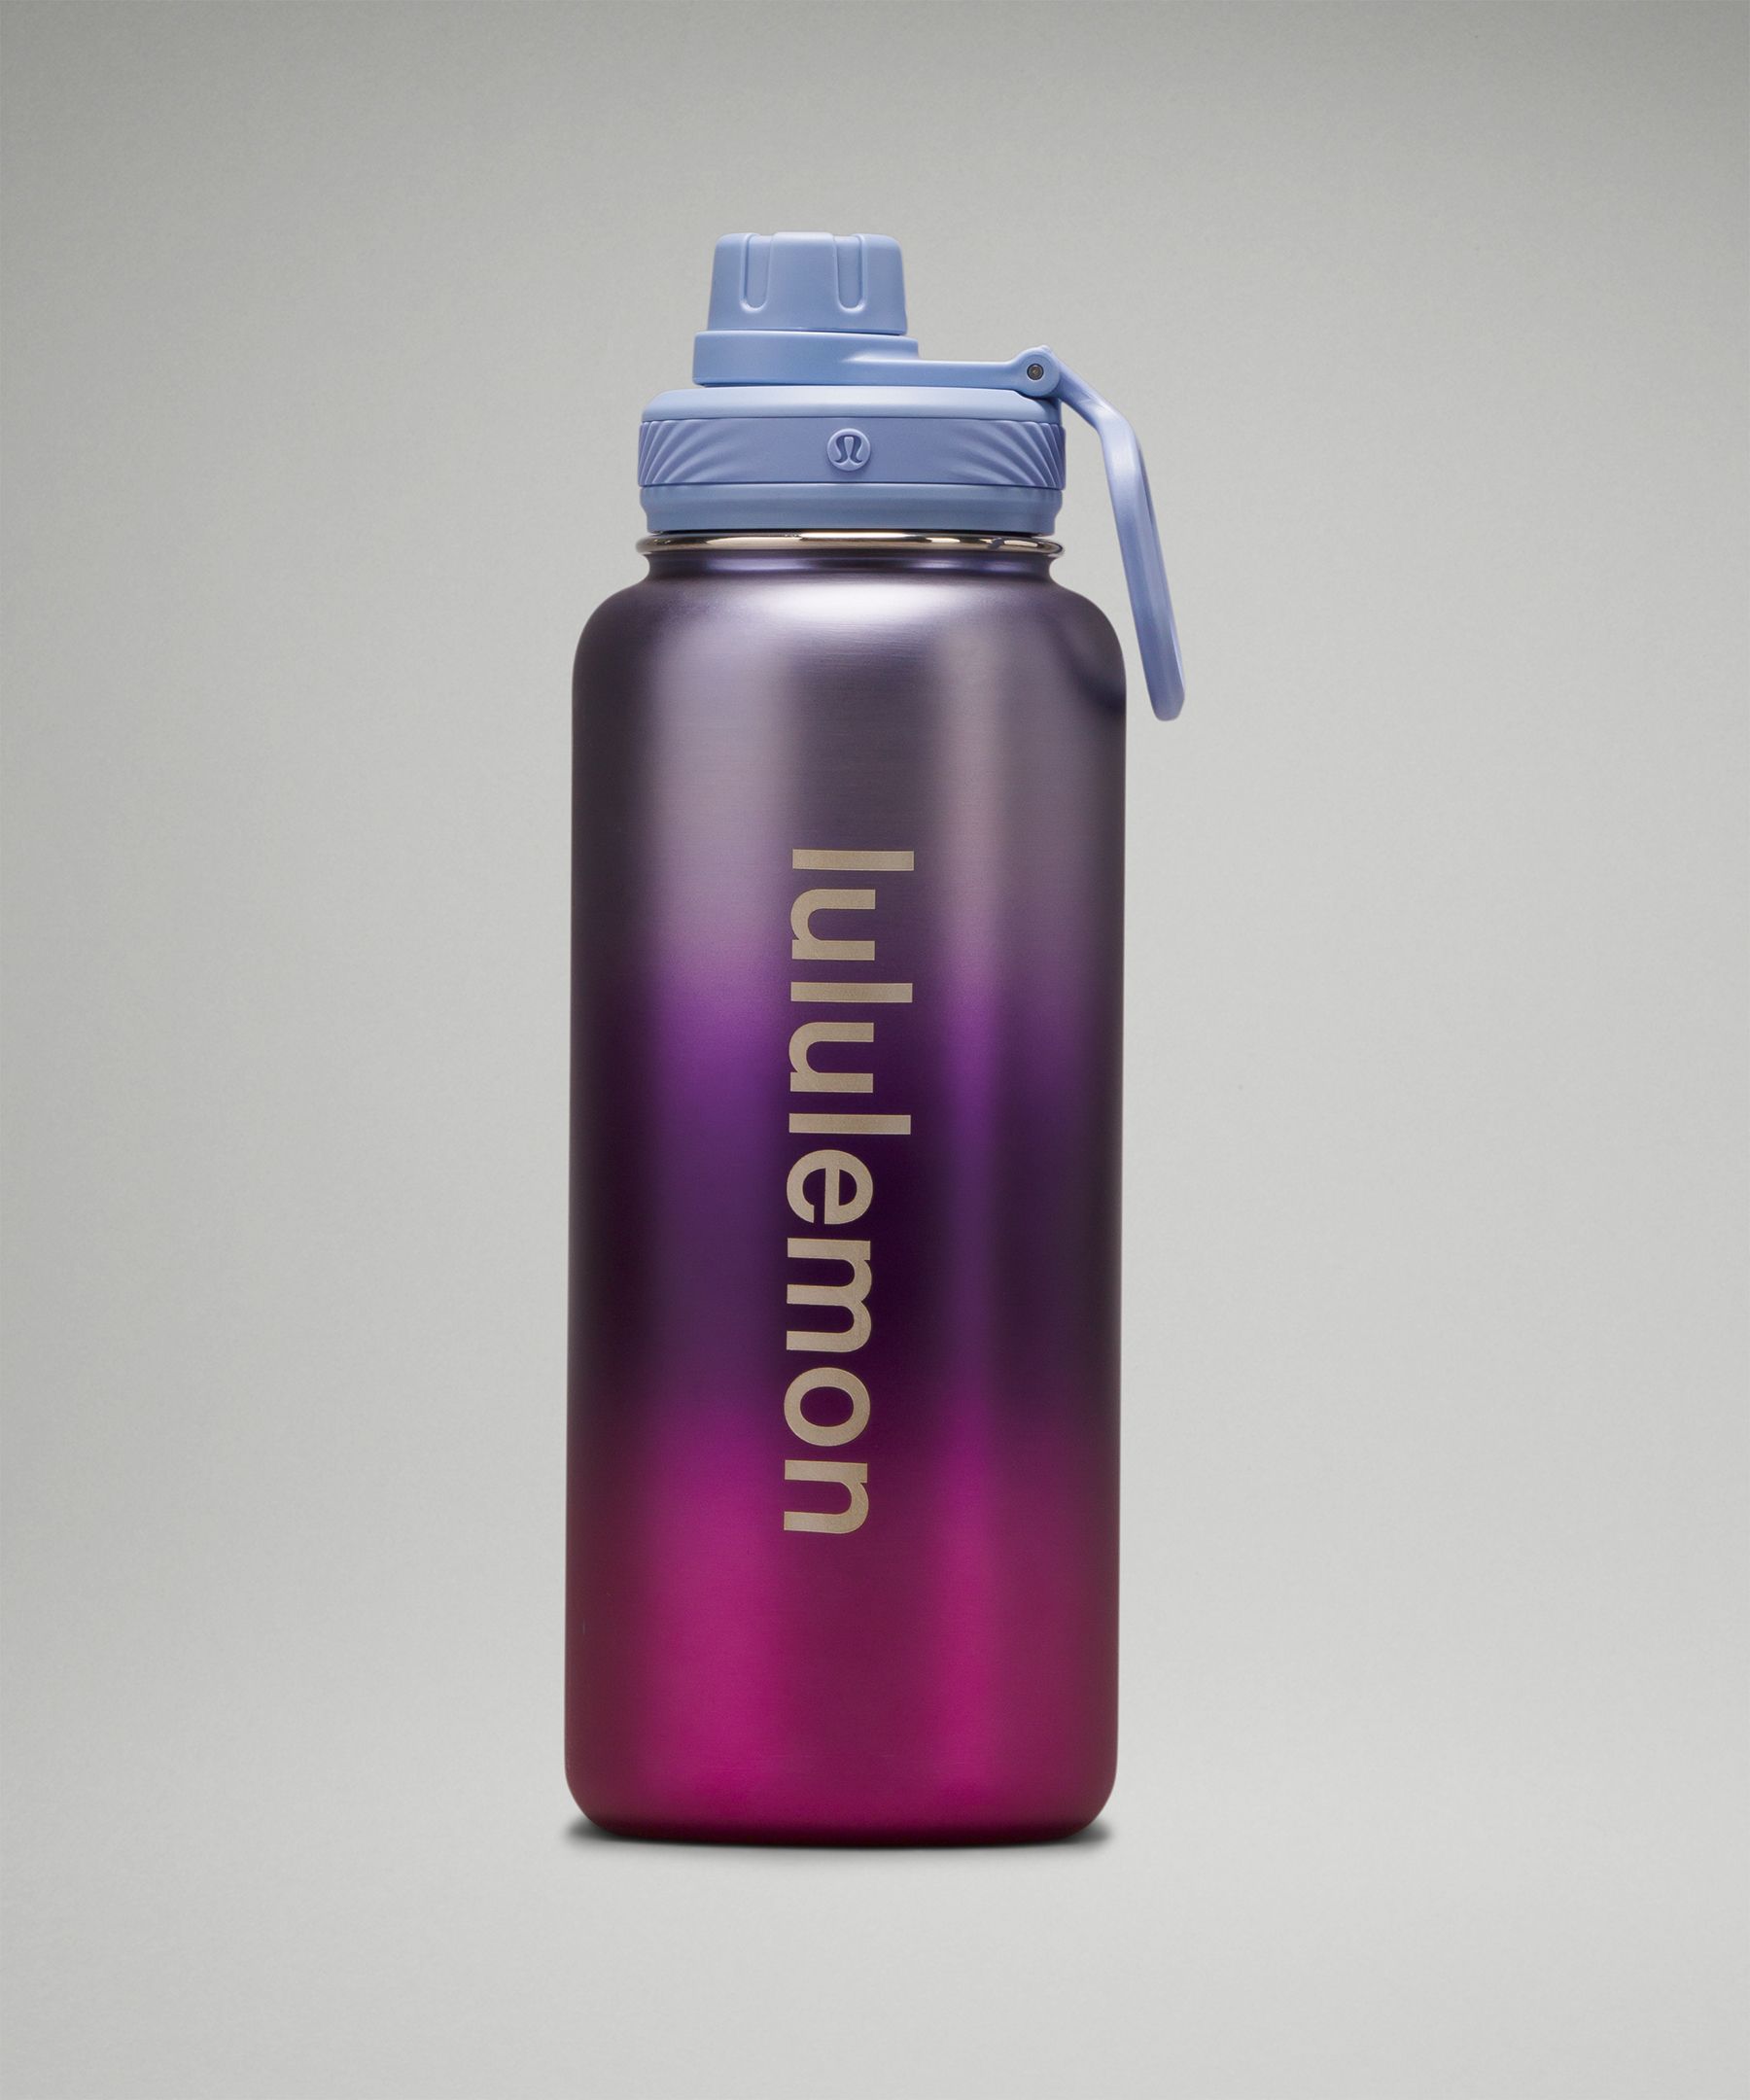 Lululemon water bottles personalized engraving at HK store : r